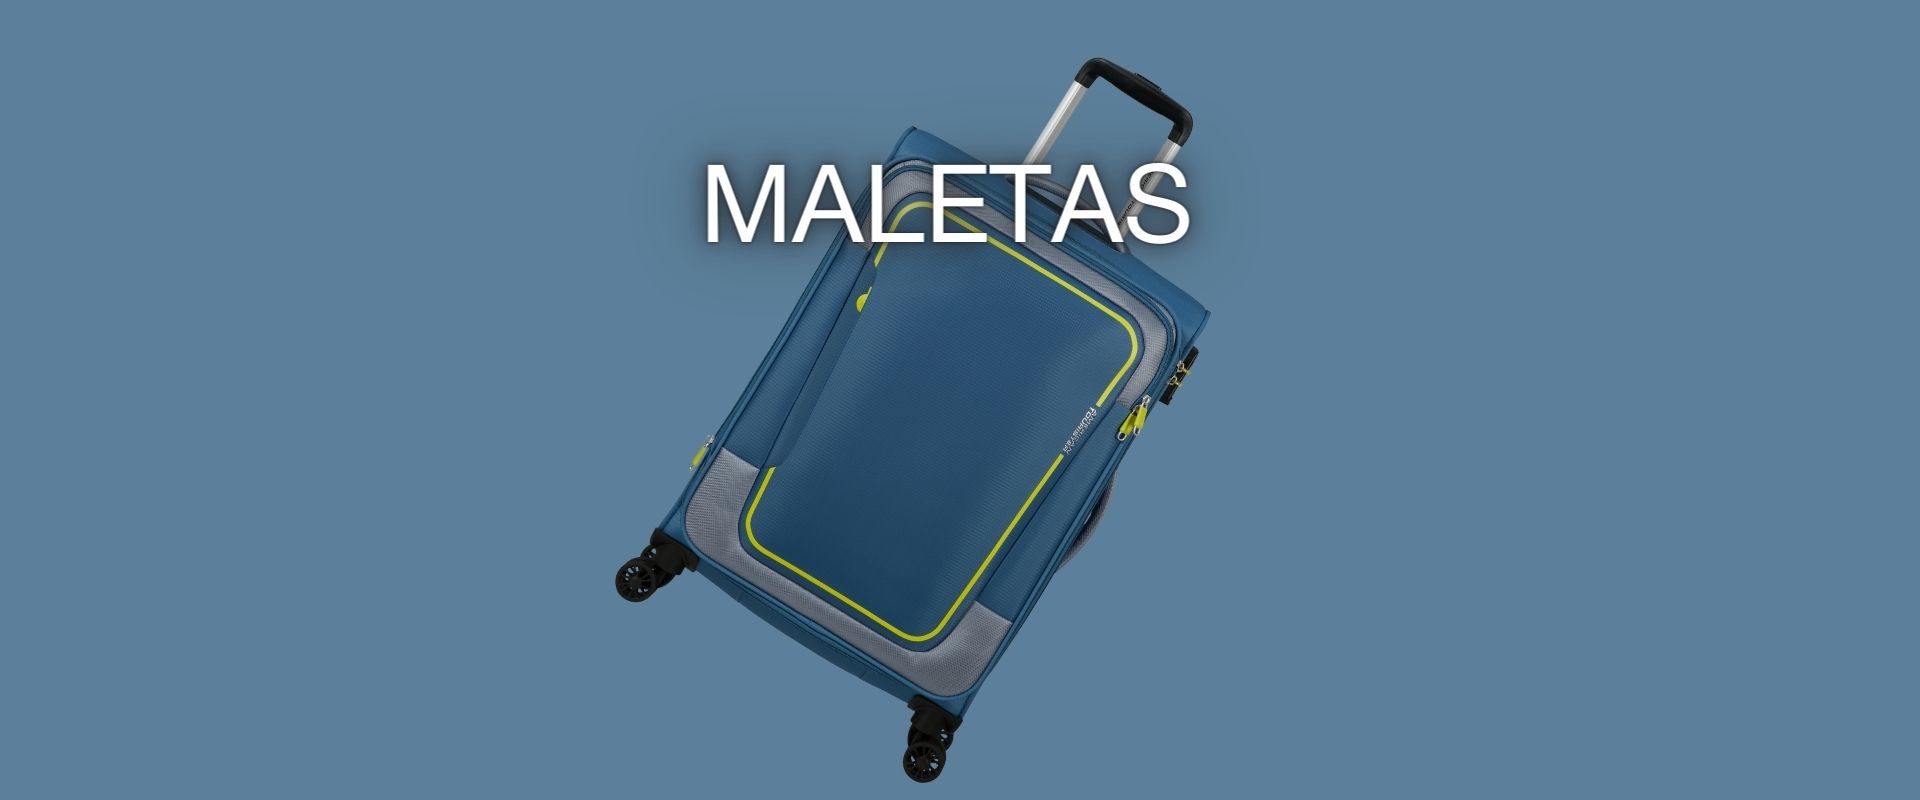 maletas online